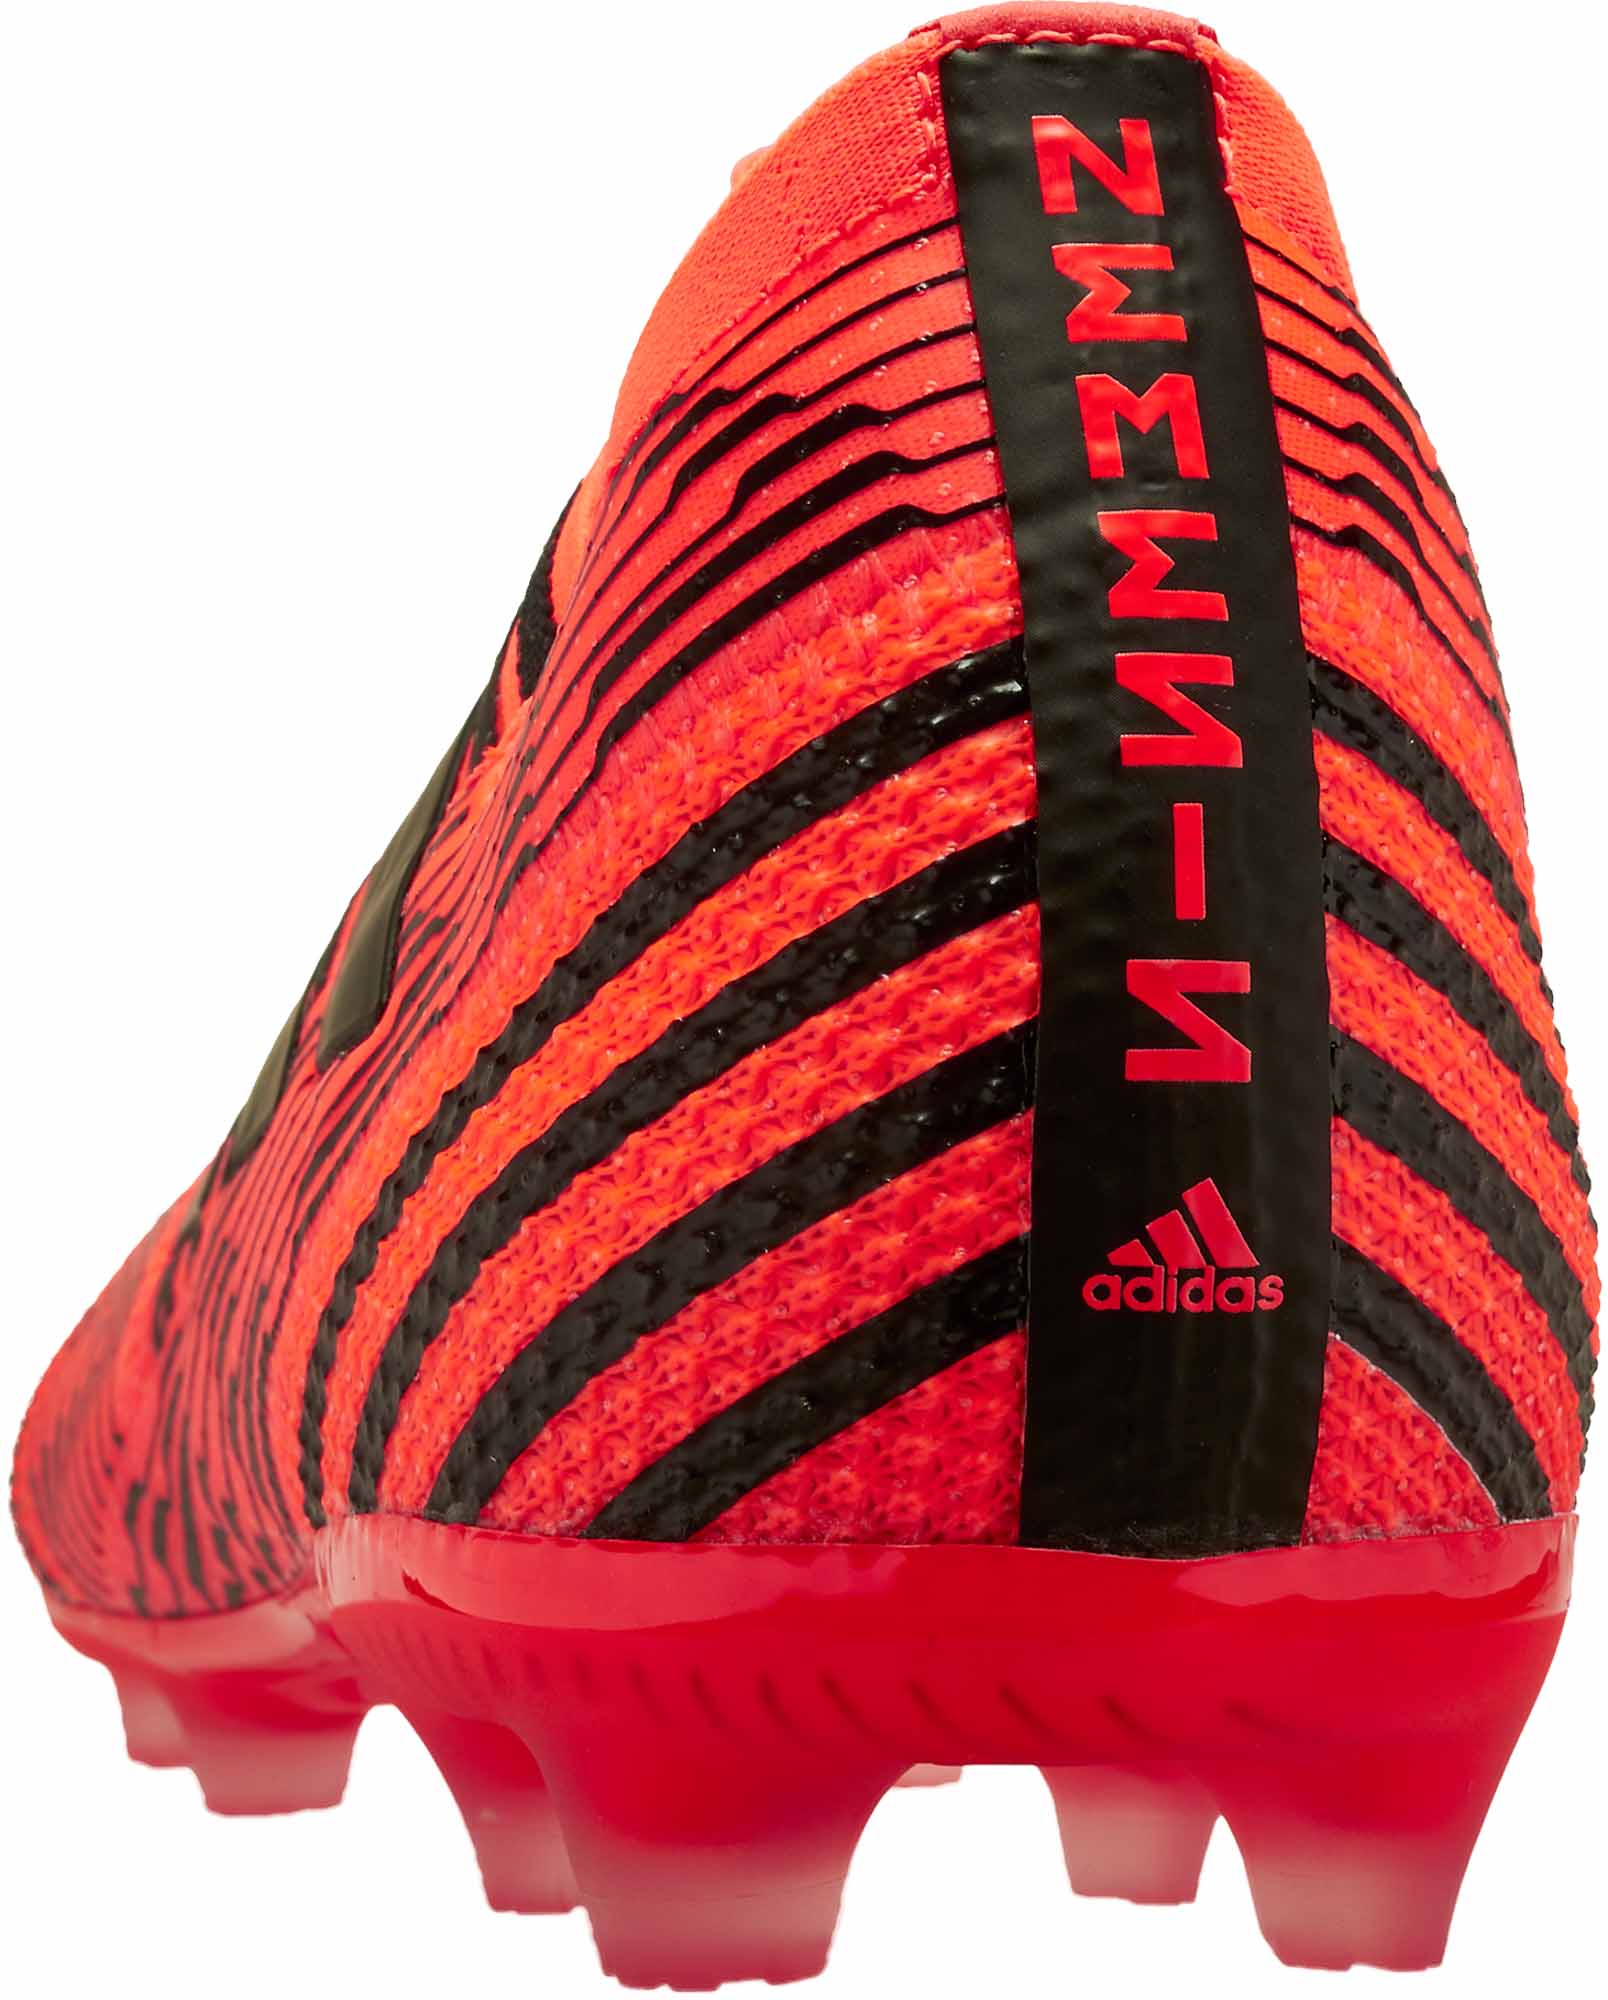 adidas kids nemeziz 17 360 agility fg soccer cleats